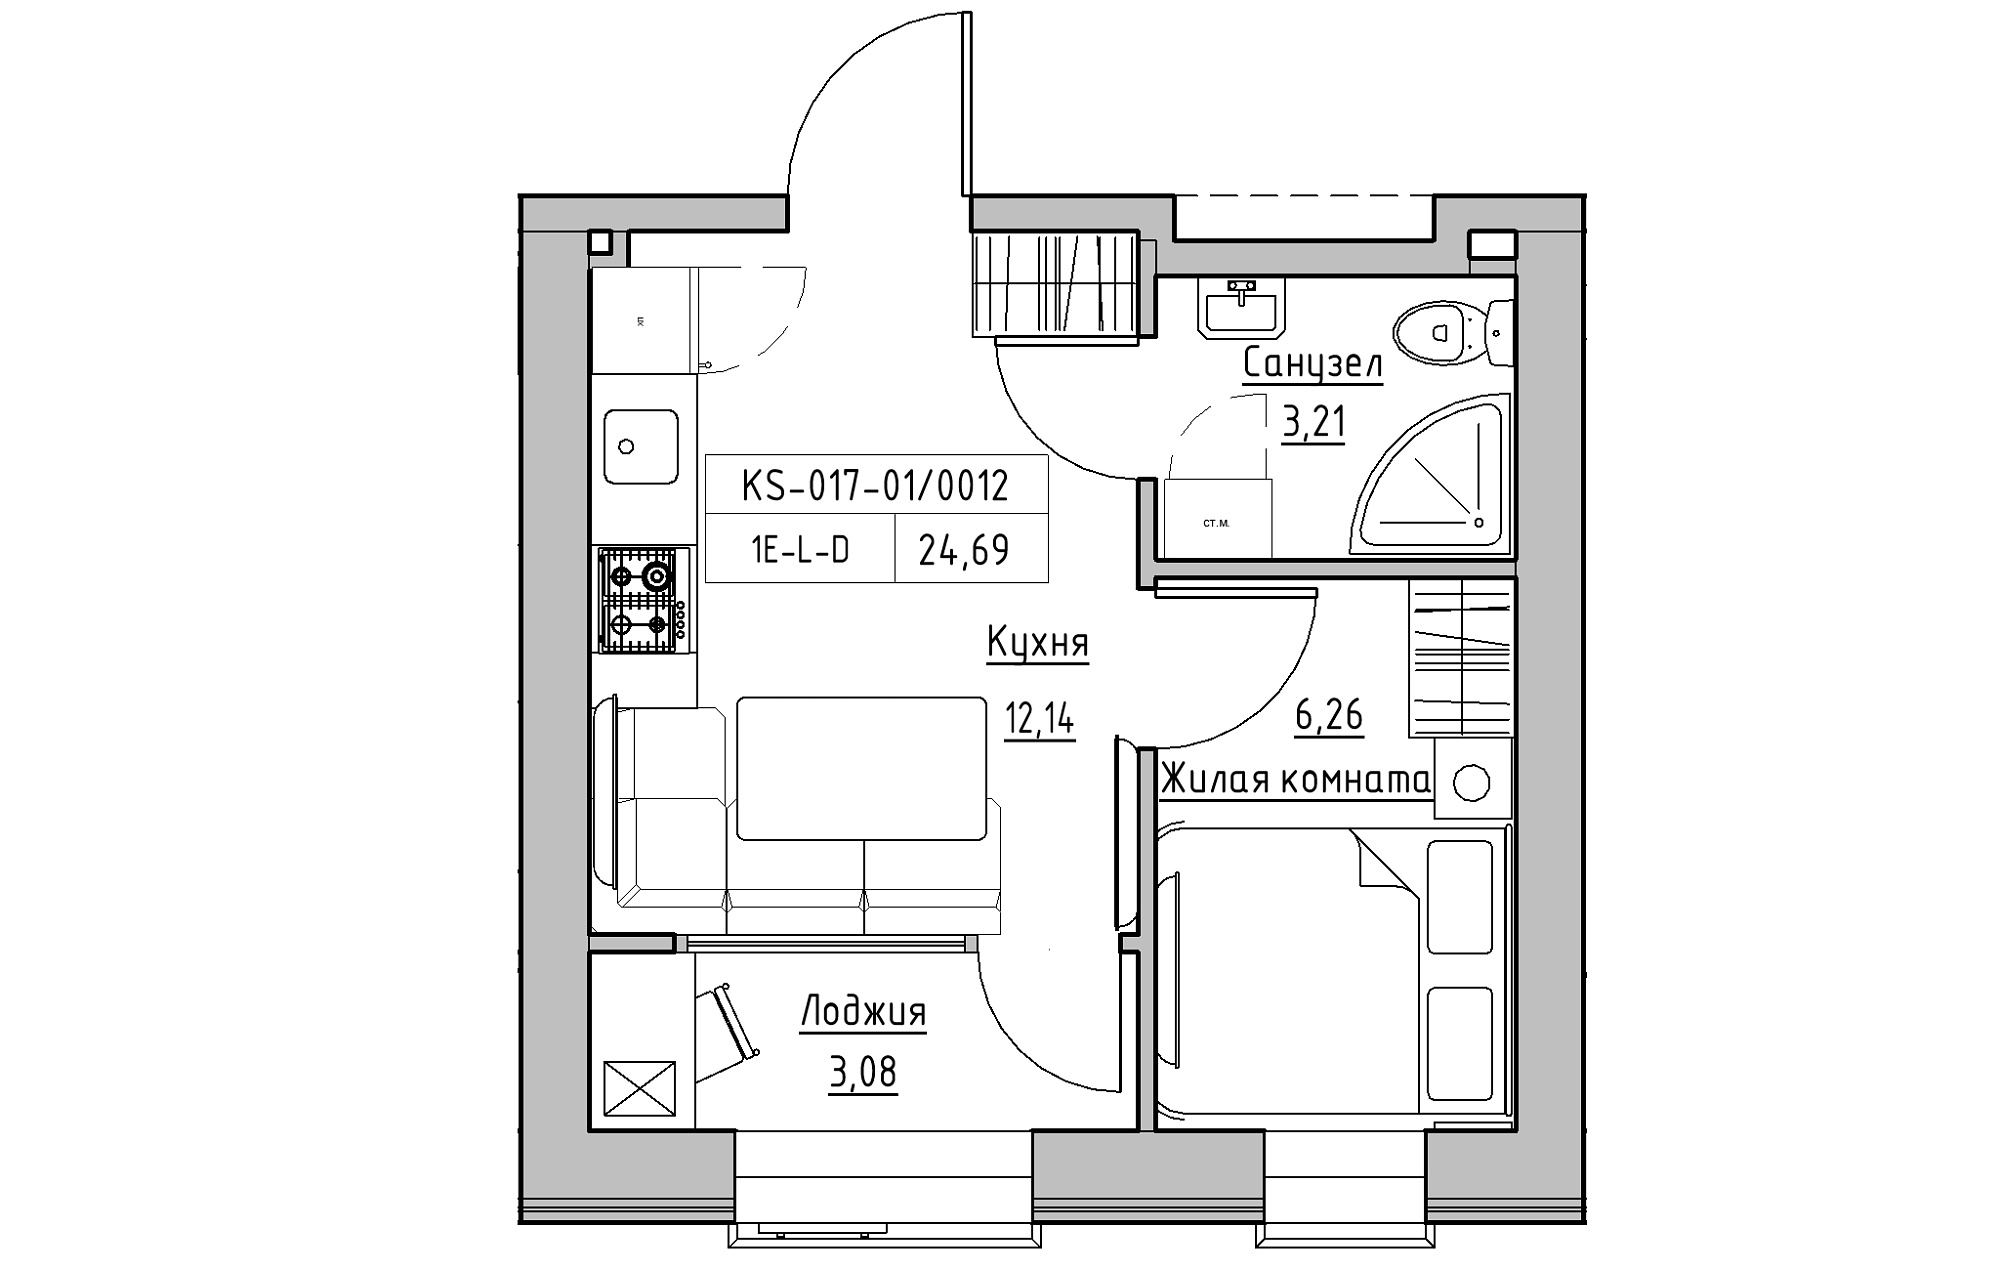 Planning 1-rm flats area 24.69m2, KS-017-01/0012.